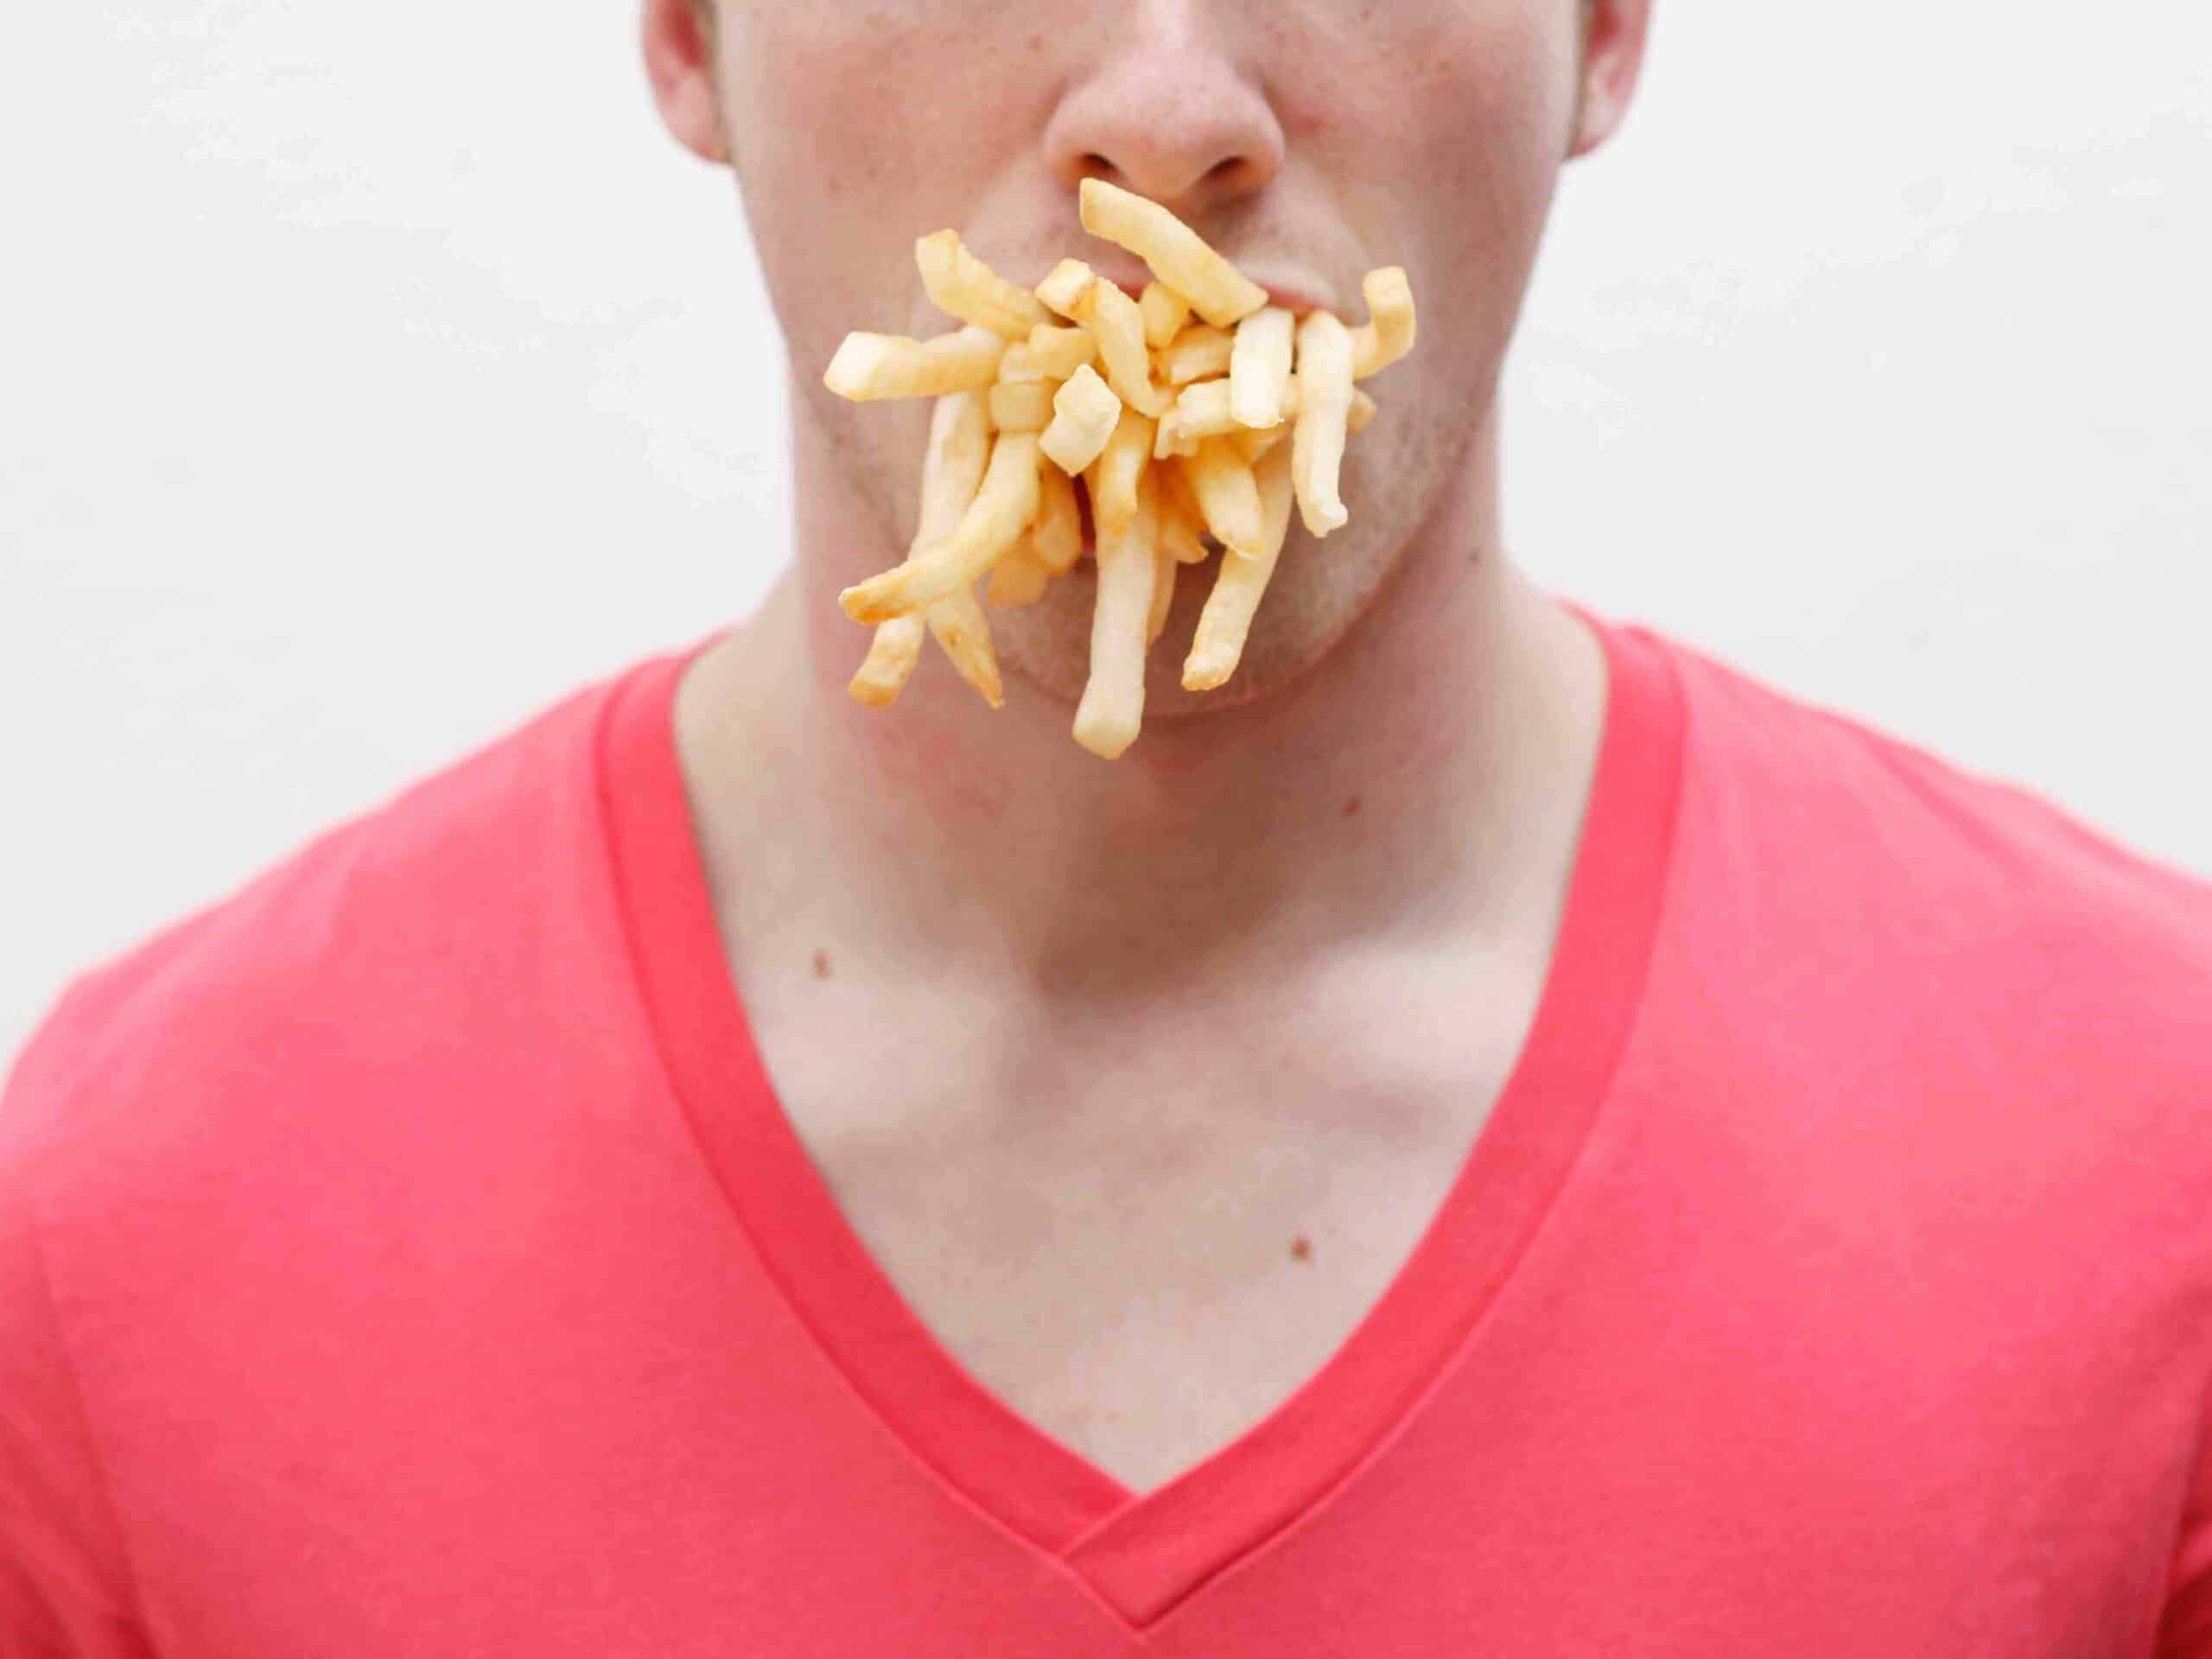 A man full of fries